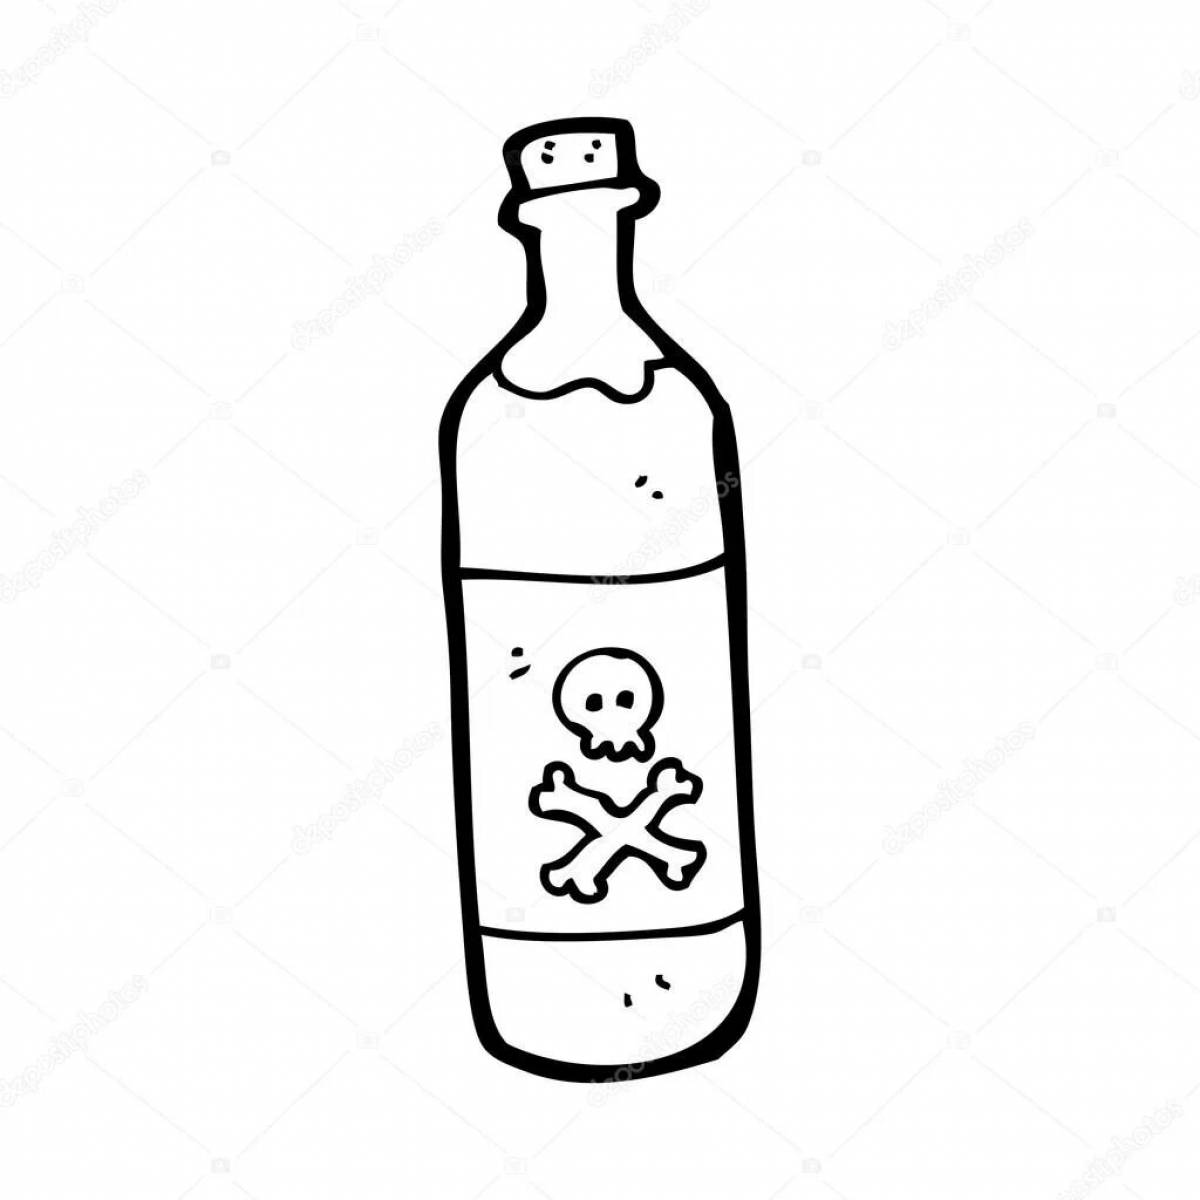 Alcohol bottle #2